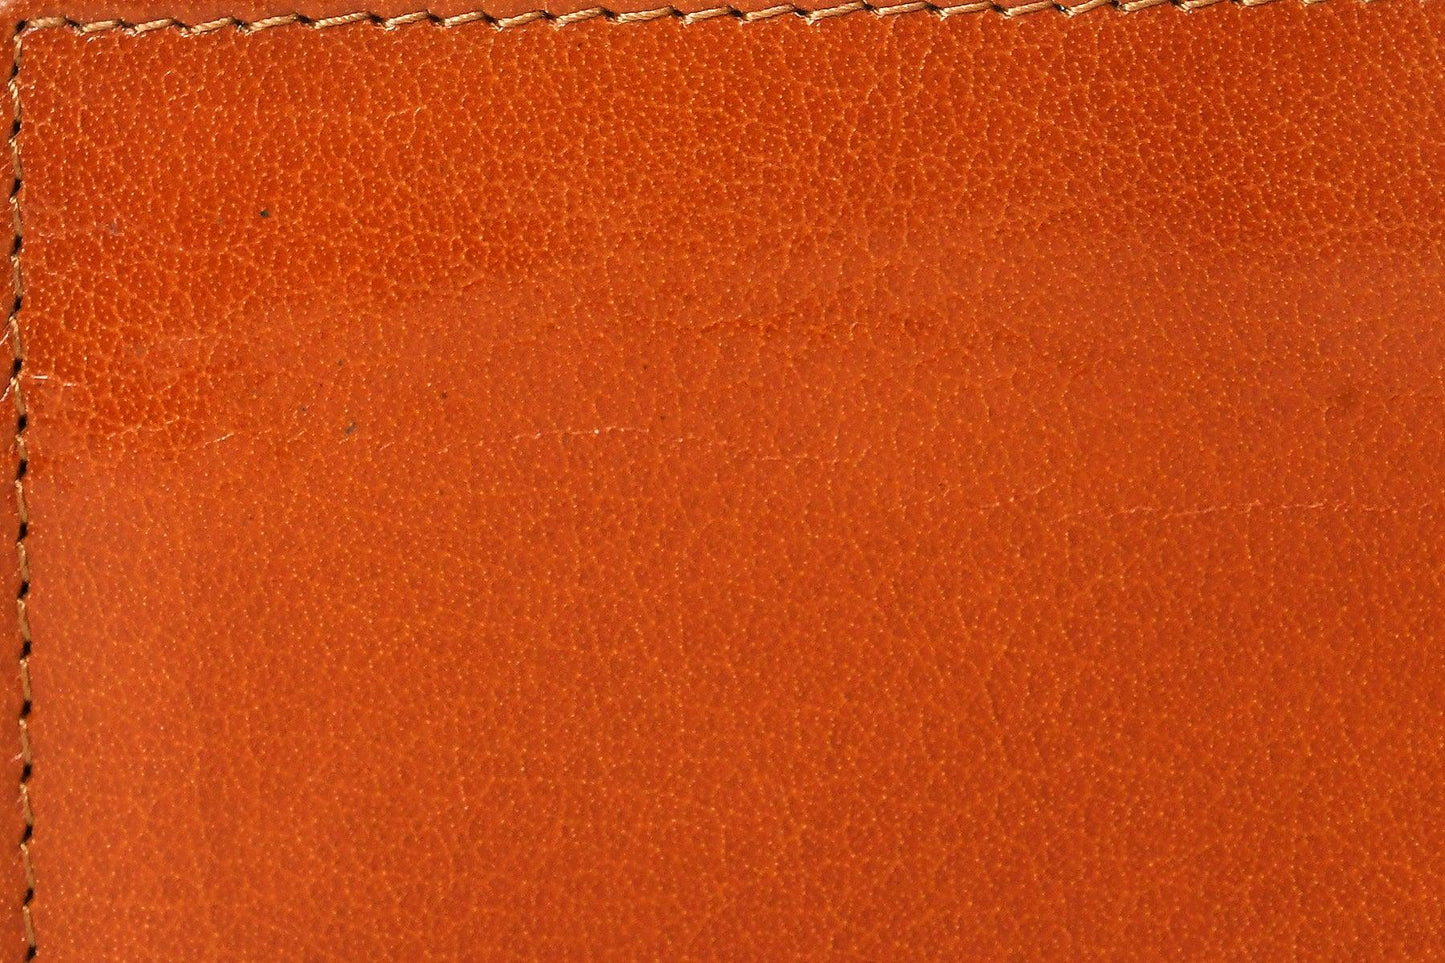 Celtic Tan Color Pure Leather Wallet For Men - CELTICINDIA